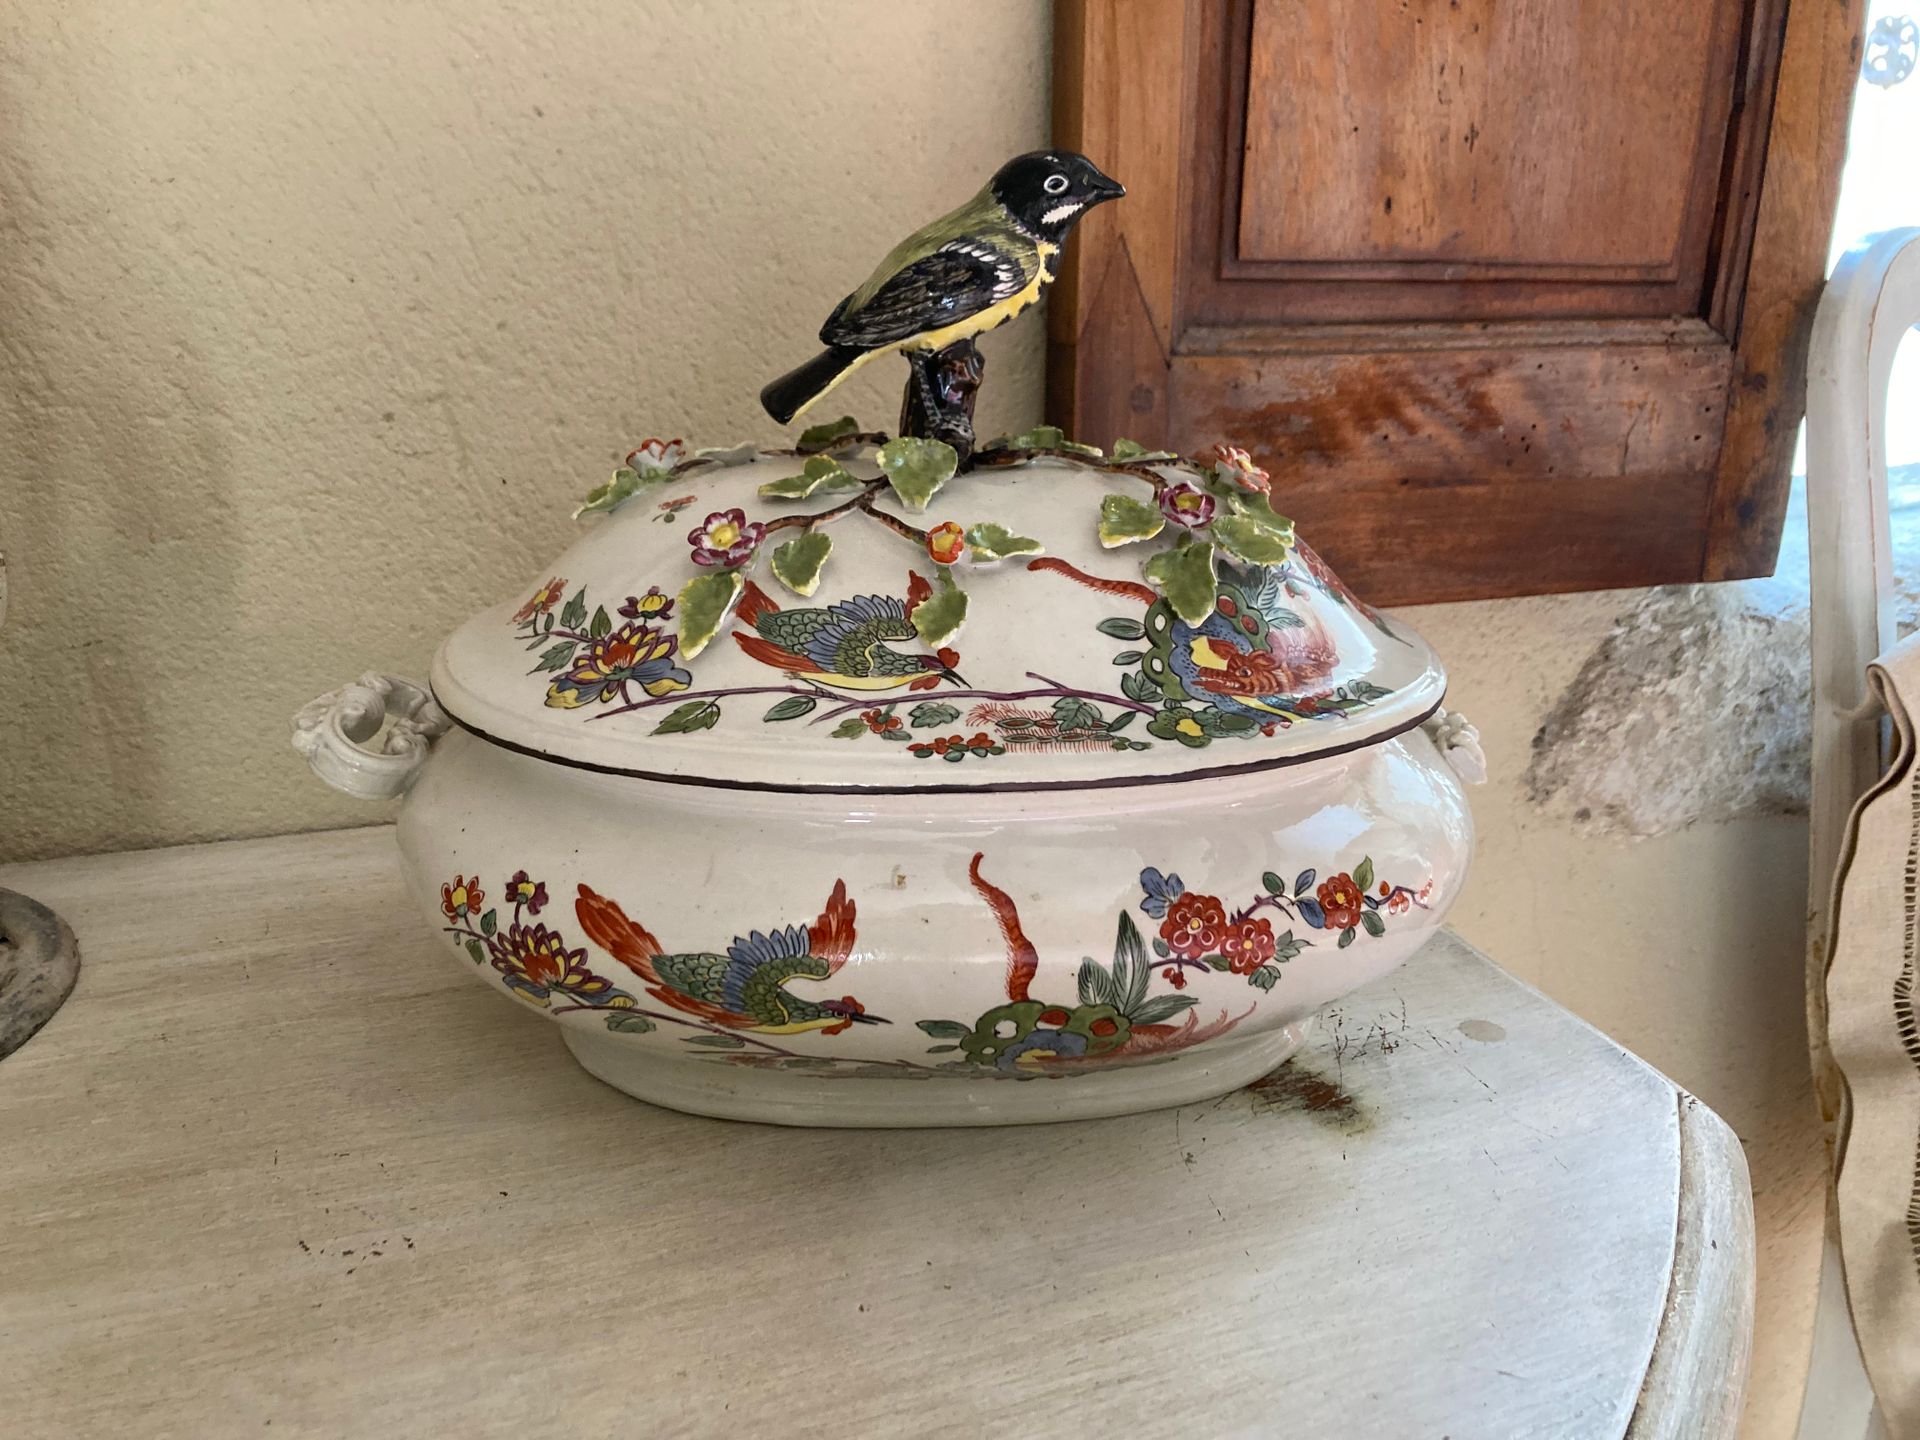 Null 多色珐琅彩陶瓷的汤锅，装饰有鸟类，奇妙的动物和花朵的贴花。手柄是一个鸟的形状。
(损坏)
H.26 cm L. 32 cm